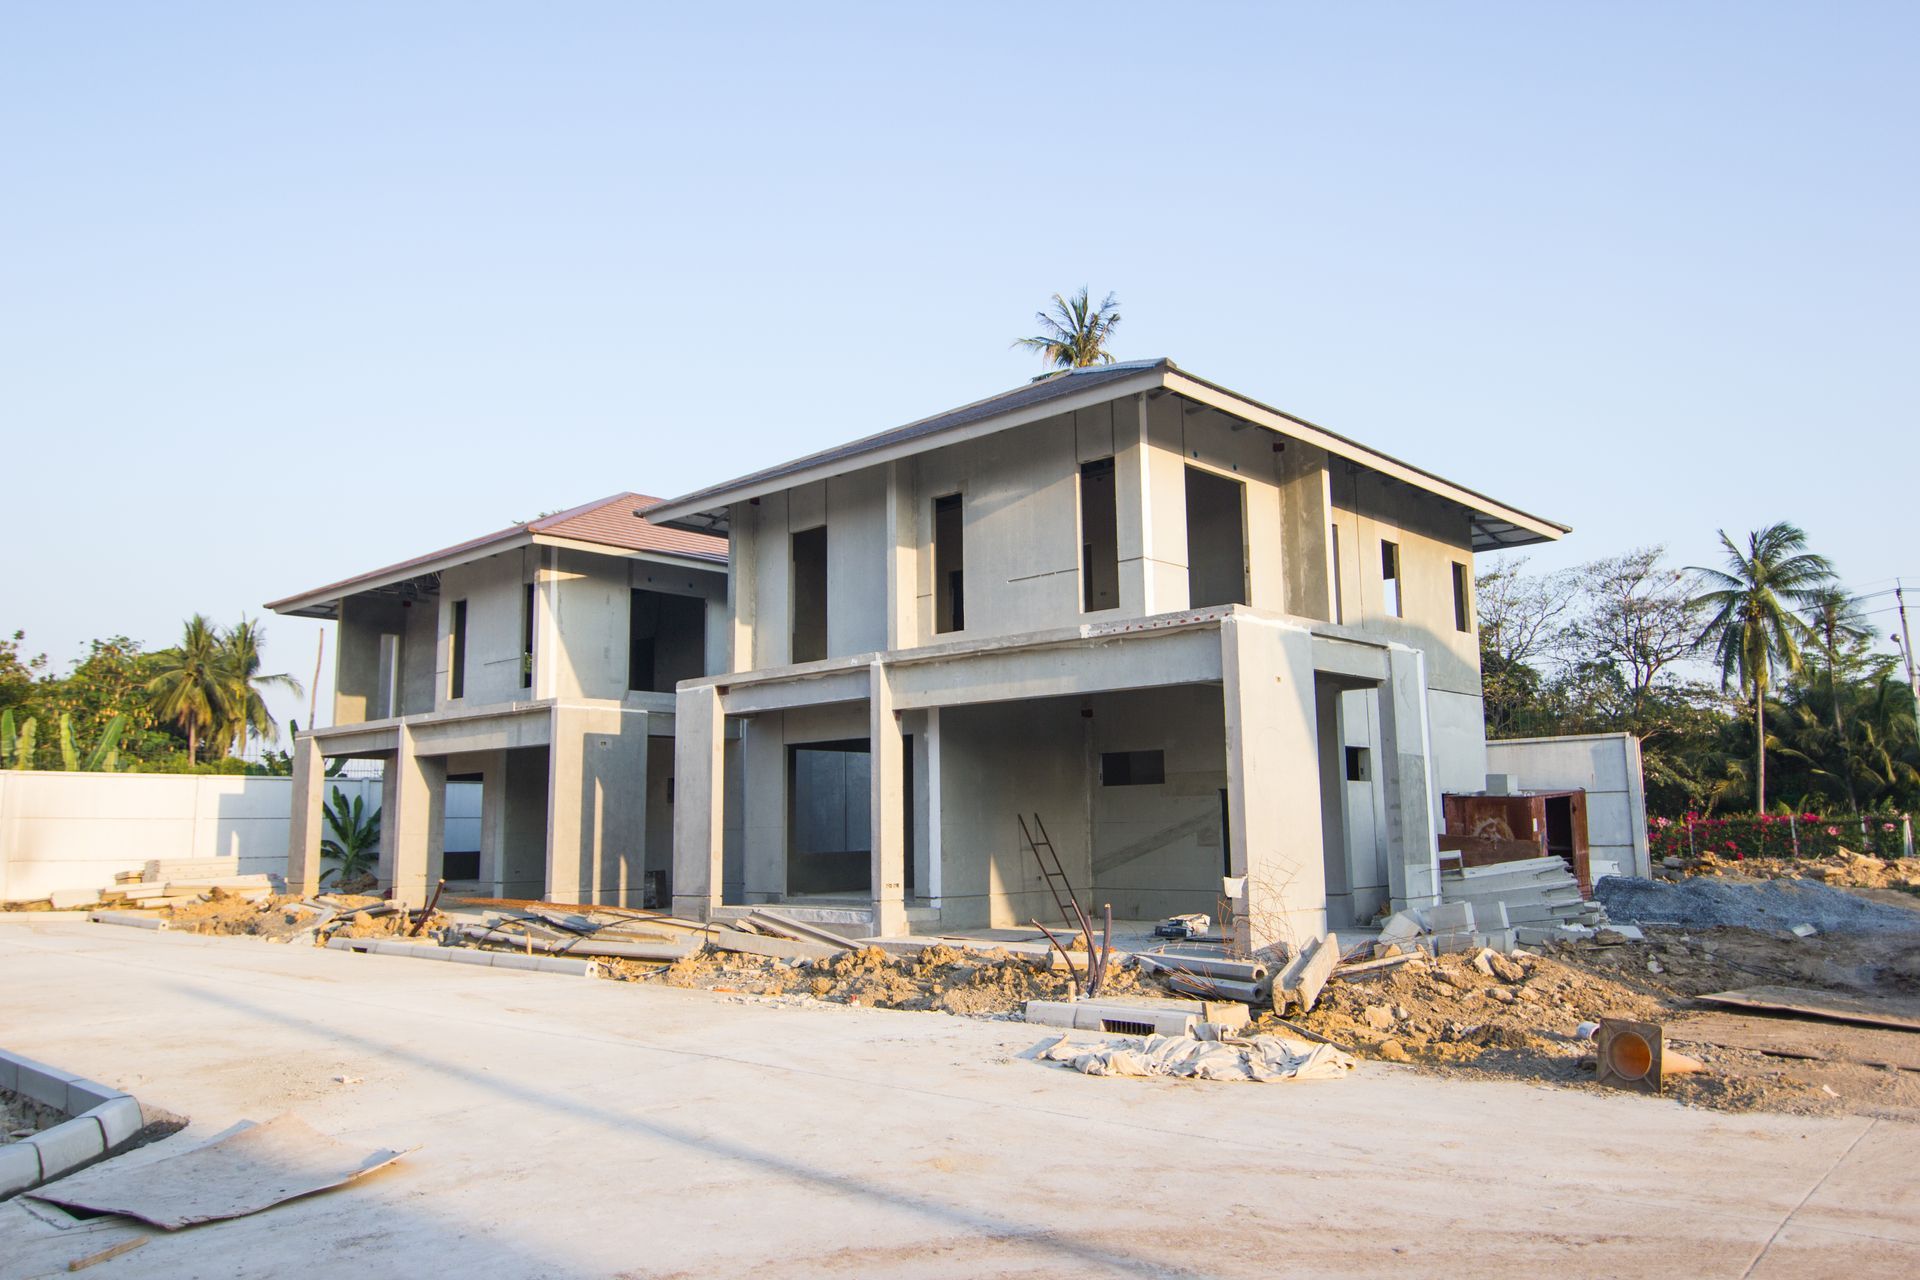 House Made of Concrete